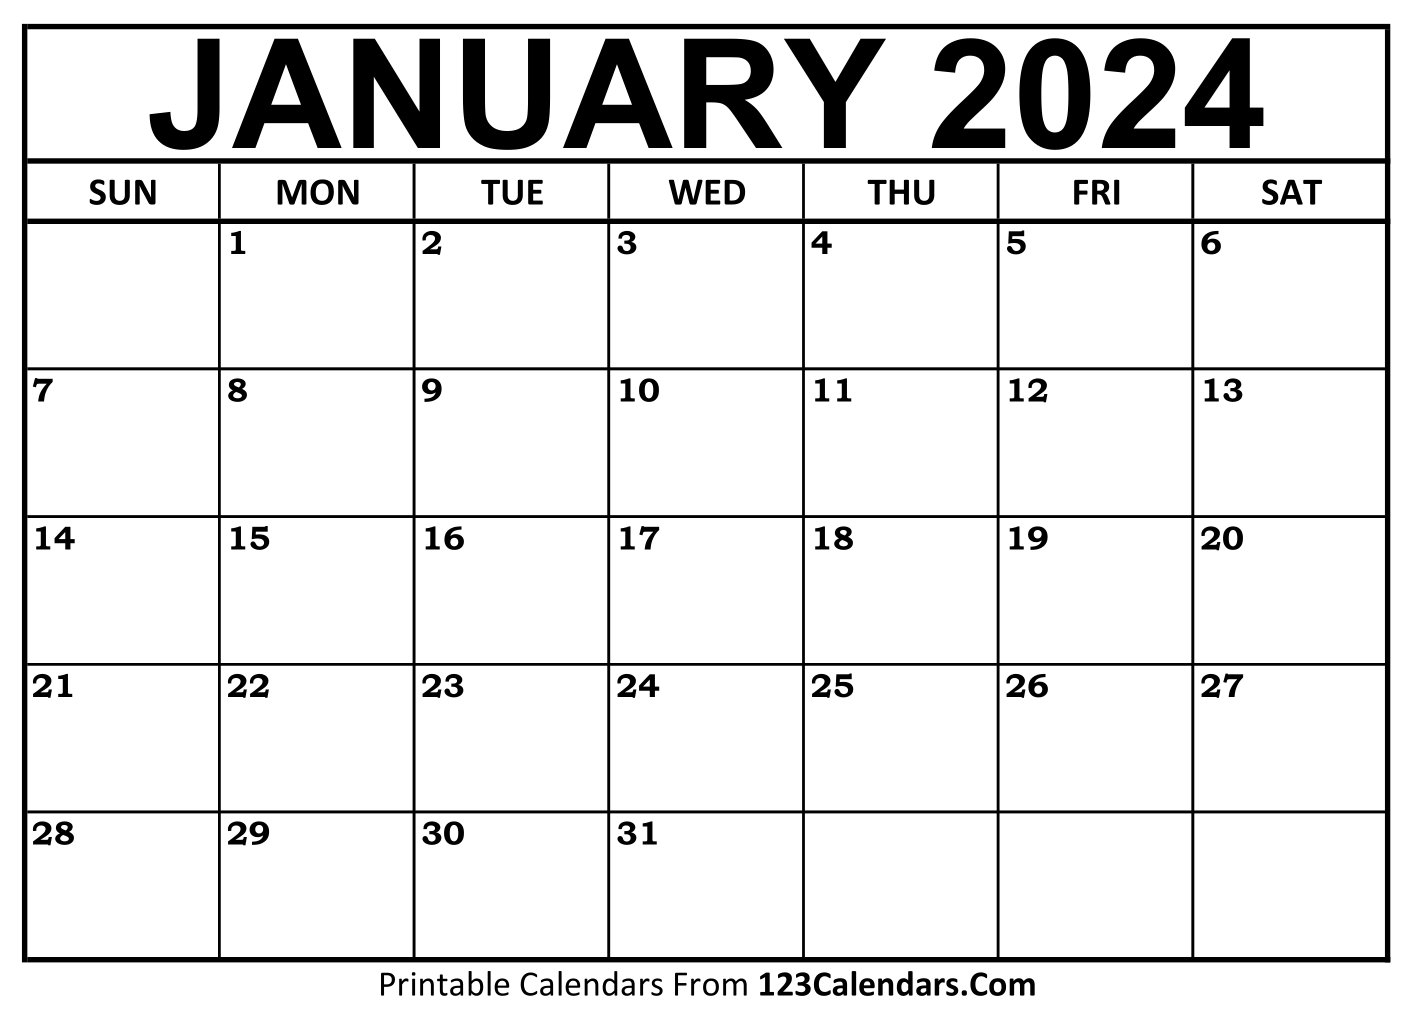 Printable January 2024 Calendar Templates - 123Calendars for January 2024 Calendar Free Printable